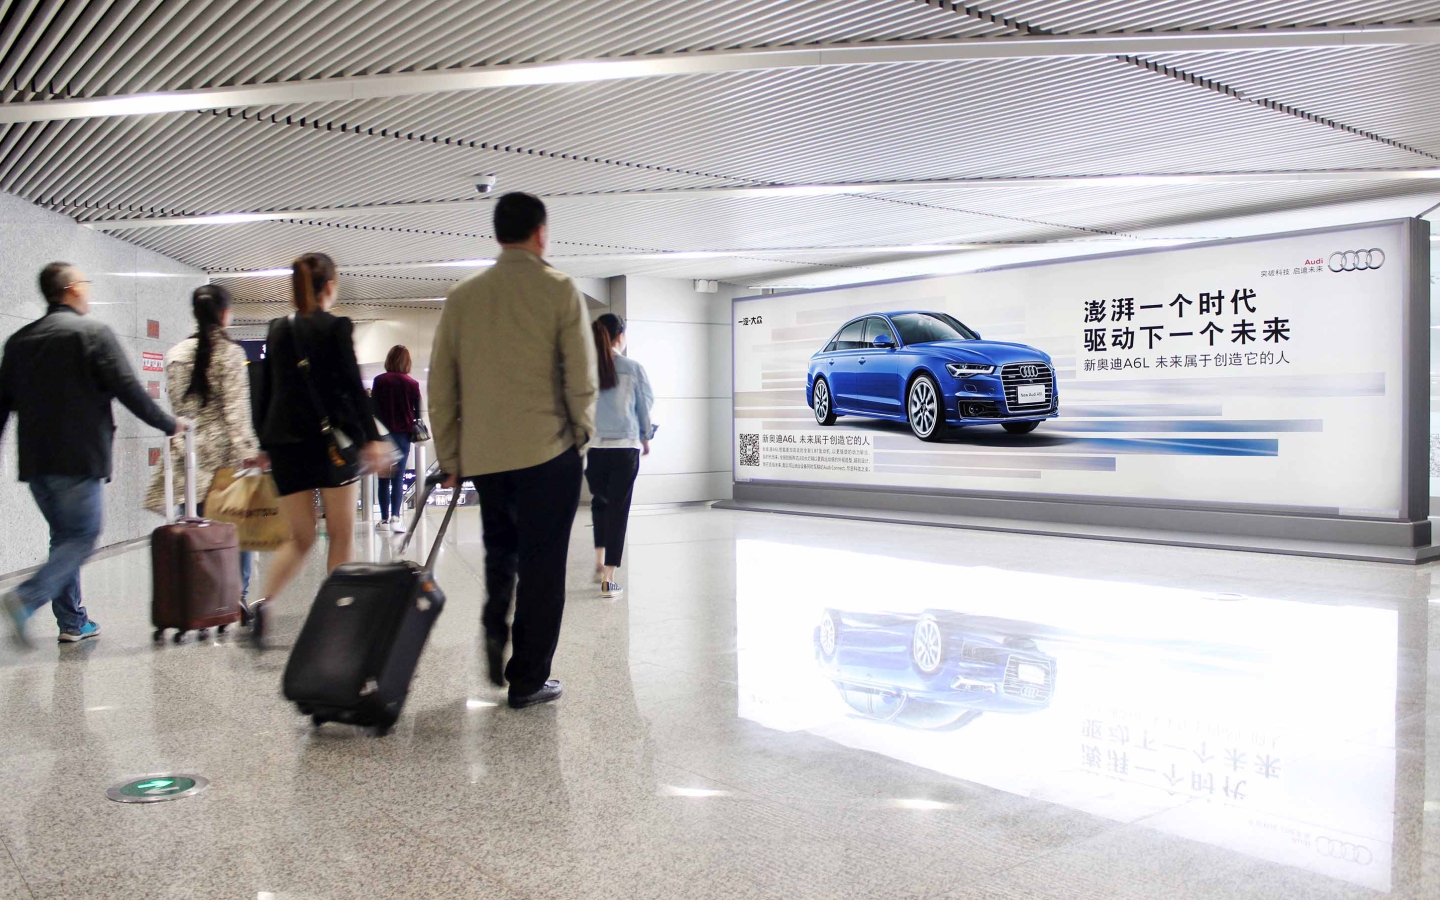 Audi campaign at Chengdu airport, 2016-03, JCDecaux China